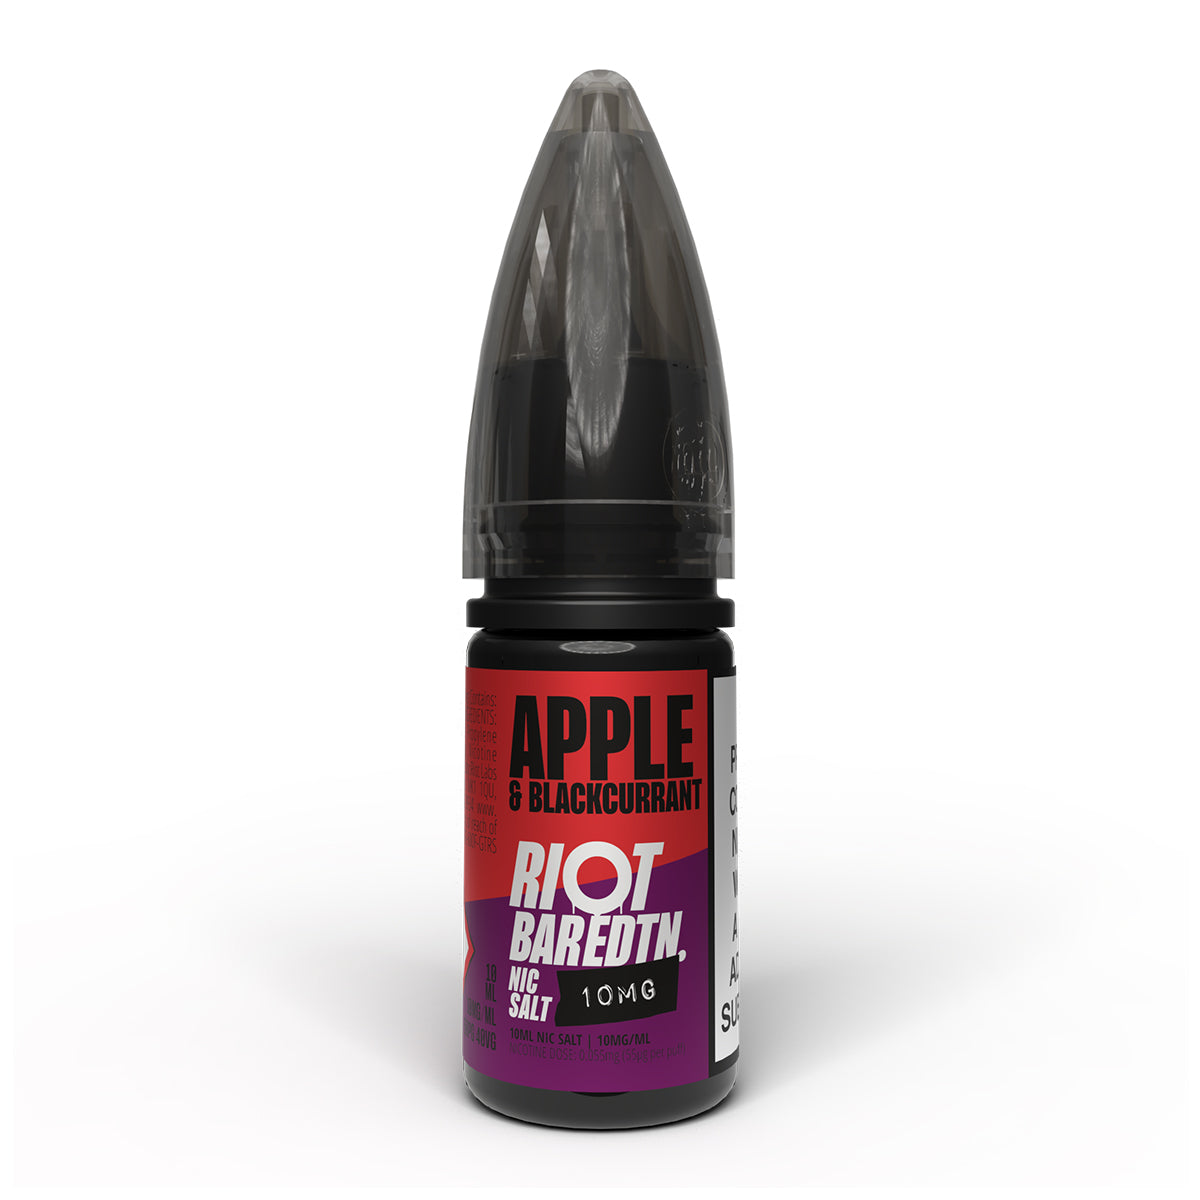 Apple & Blackcurrant 10ml Nicotine Salt 10mg by Riot Bar Edtn